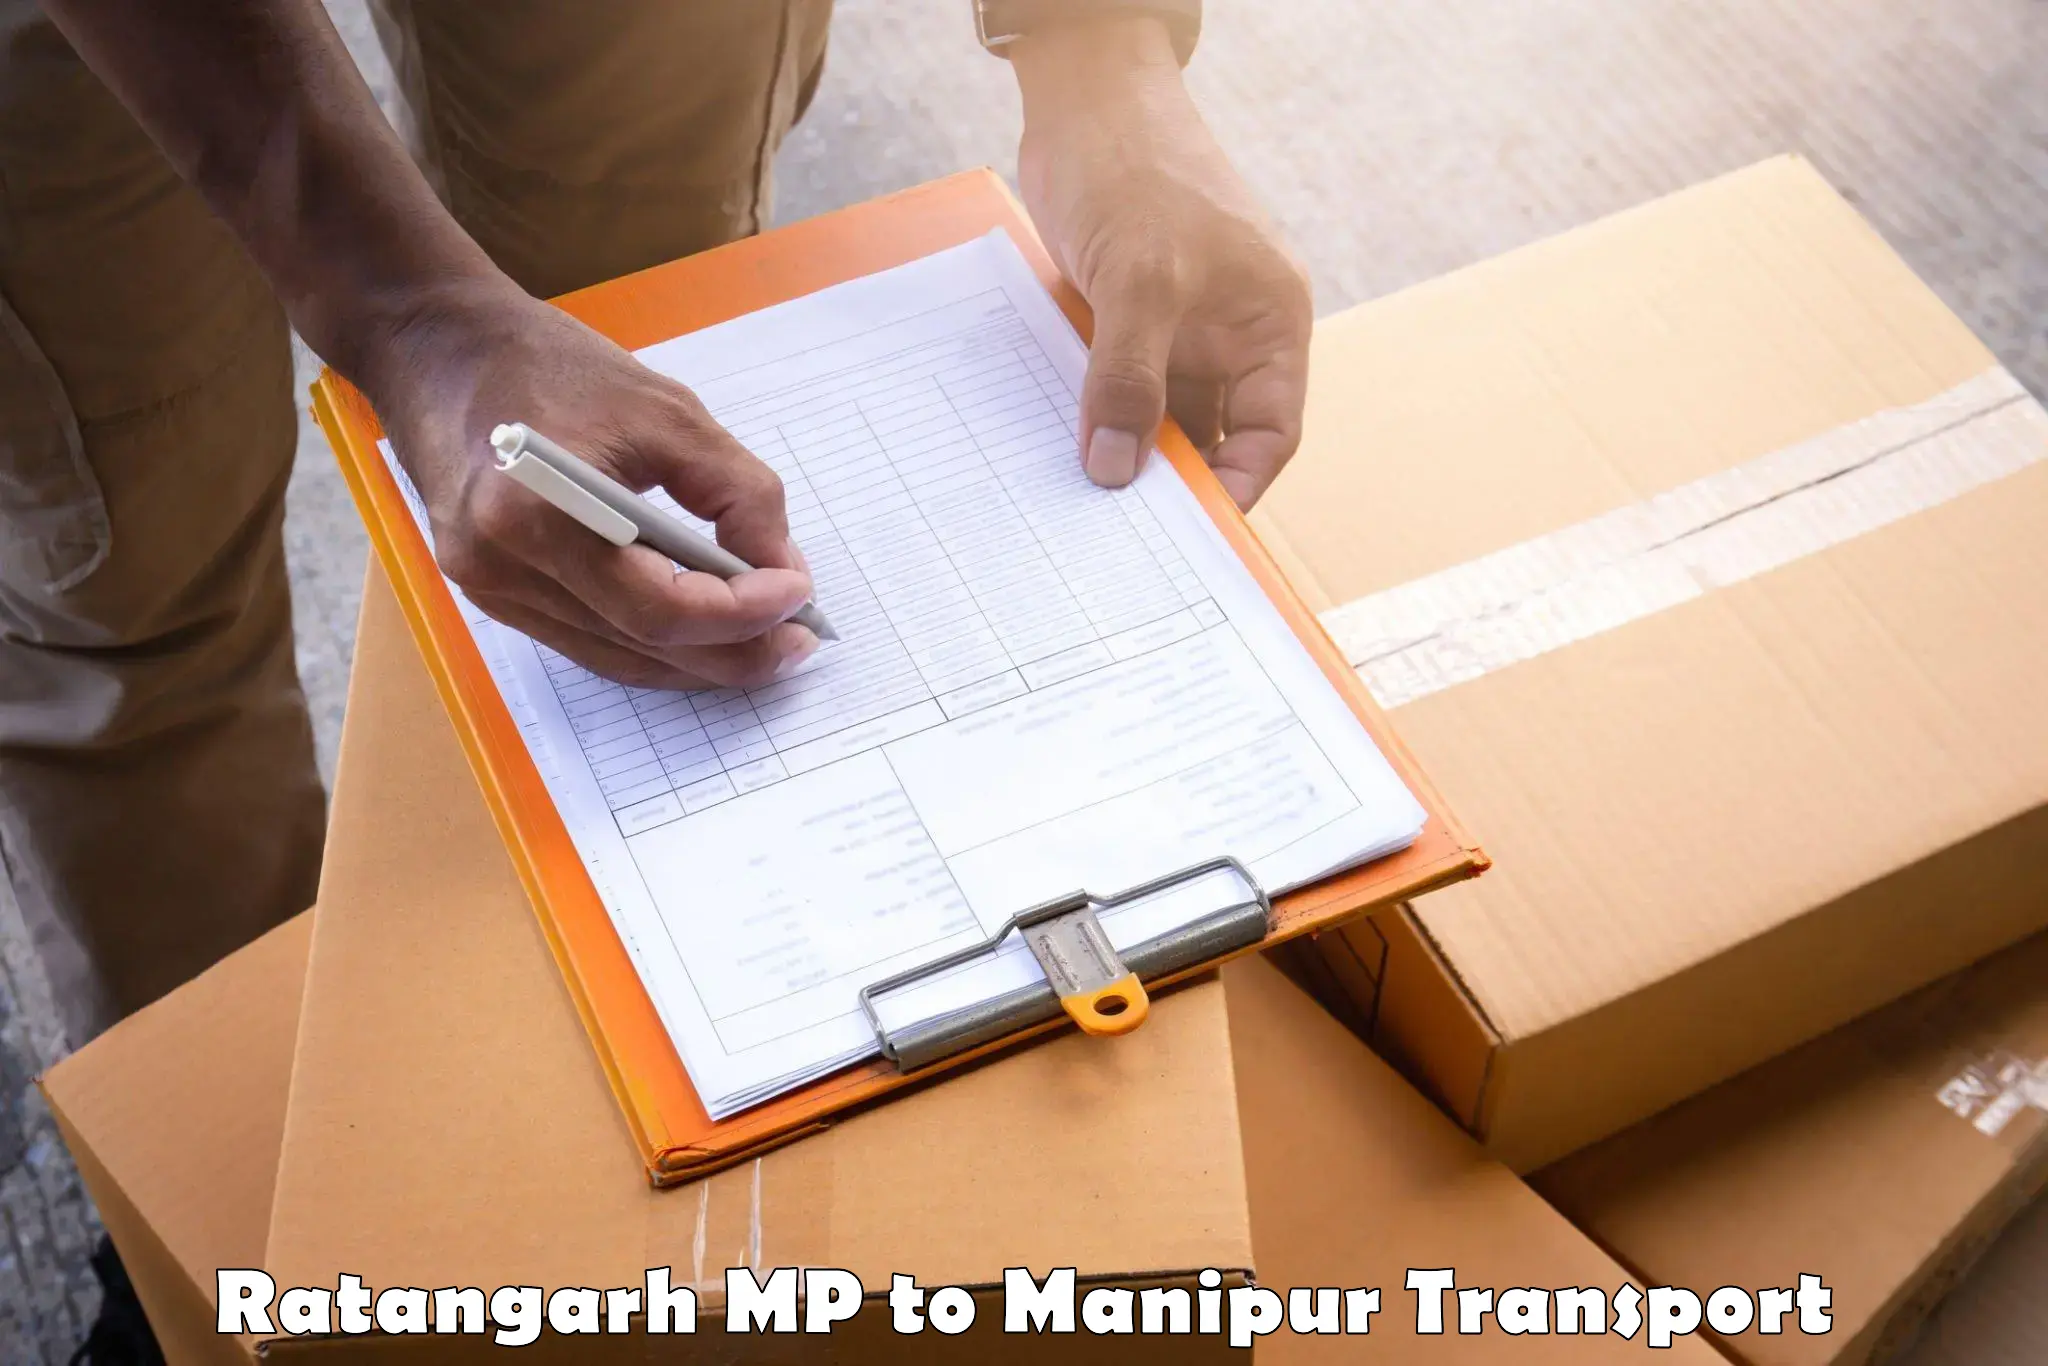 Online transport service Ratangarh MP to Manipur